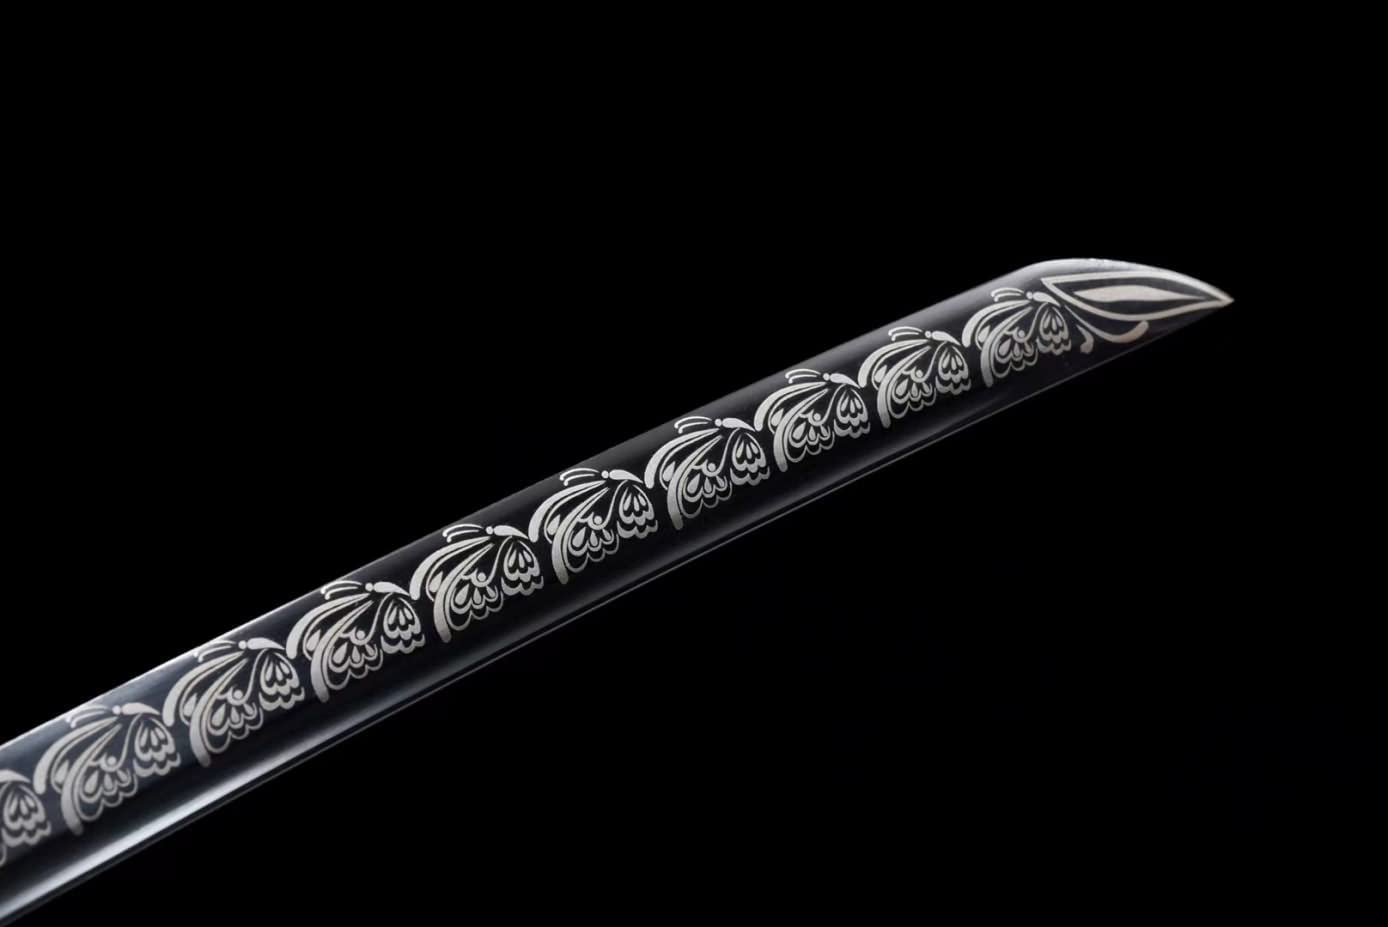 Samurai Sword,Hand Forged High Carbon Steel Blades,White Scabbard